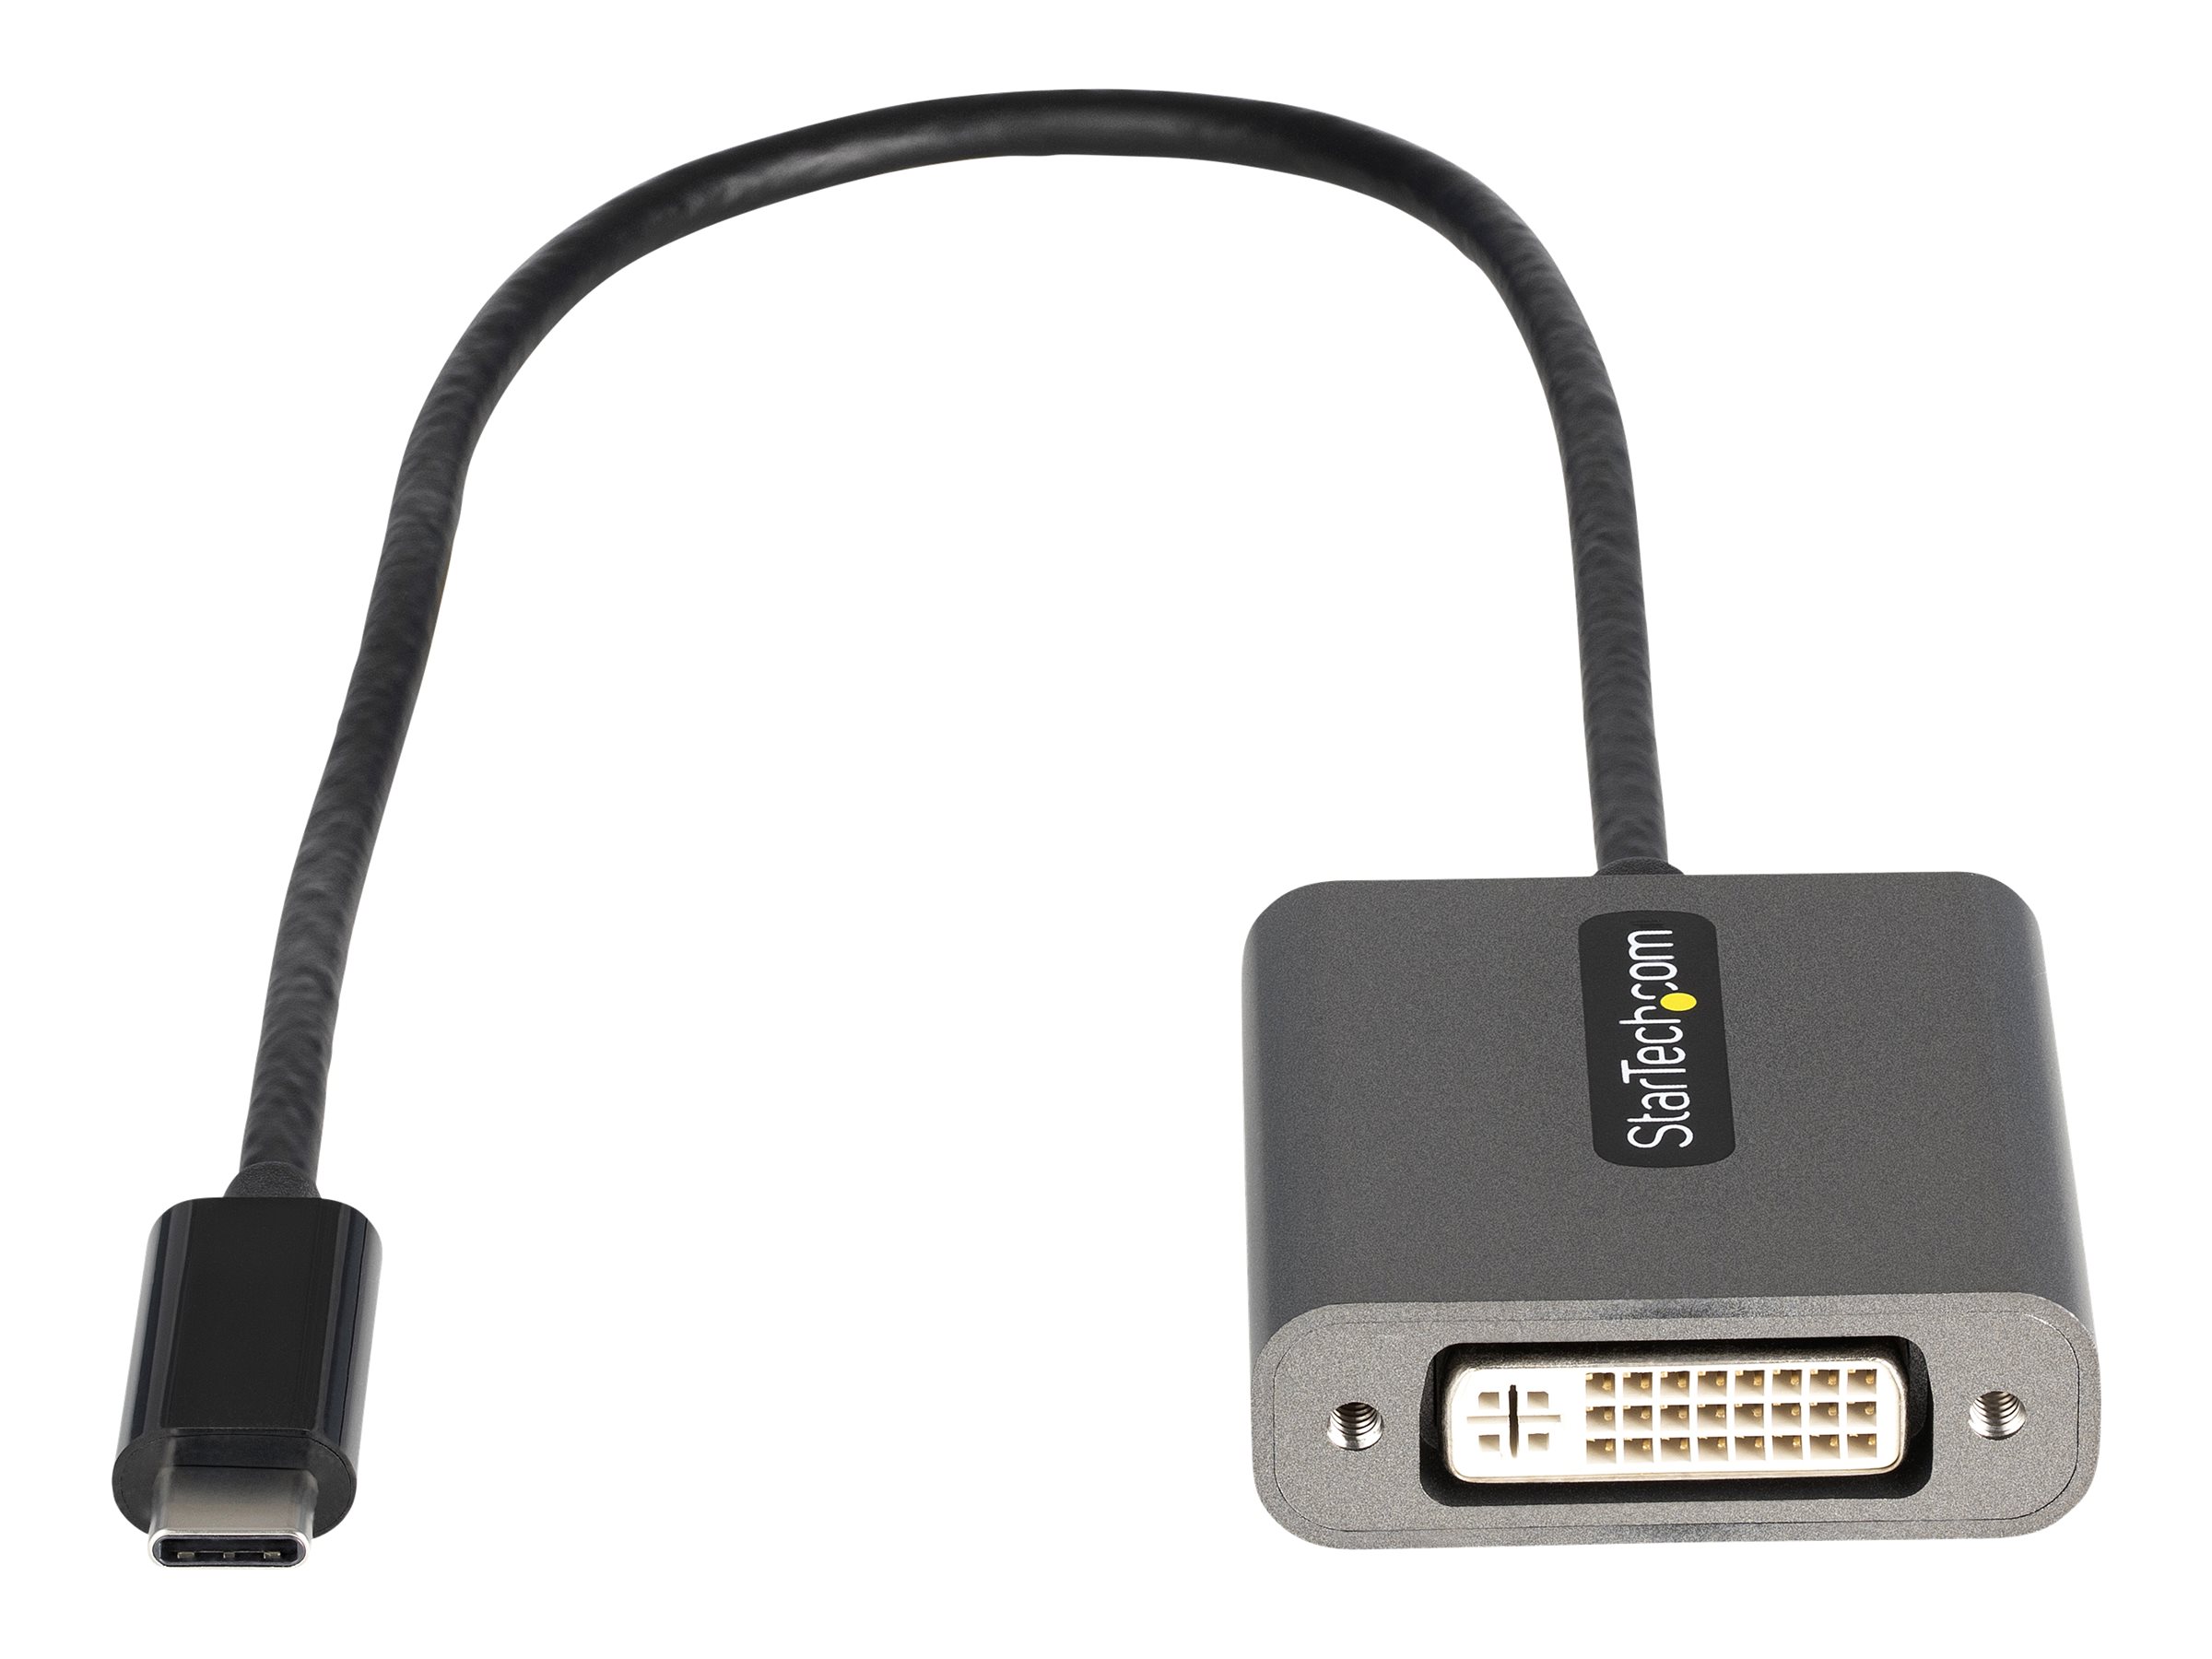 StarTech.com USB-C auf DVI Adapter - 1920x1200p - USB-C zu DVI-D - USB-C Dongle - USB Typ C auf DVI Monitoradapter - Videokonverter - Thunderbolt 3 kompatibel - 30cm Kabel (CDP2DVIEC) - Videoadapter - 24 pin USB-C zu DVI-I - 38 cm